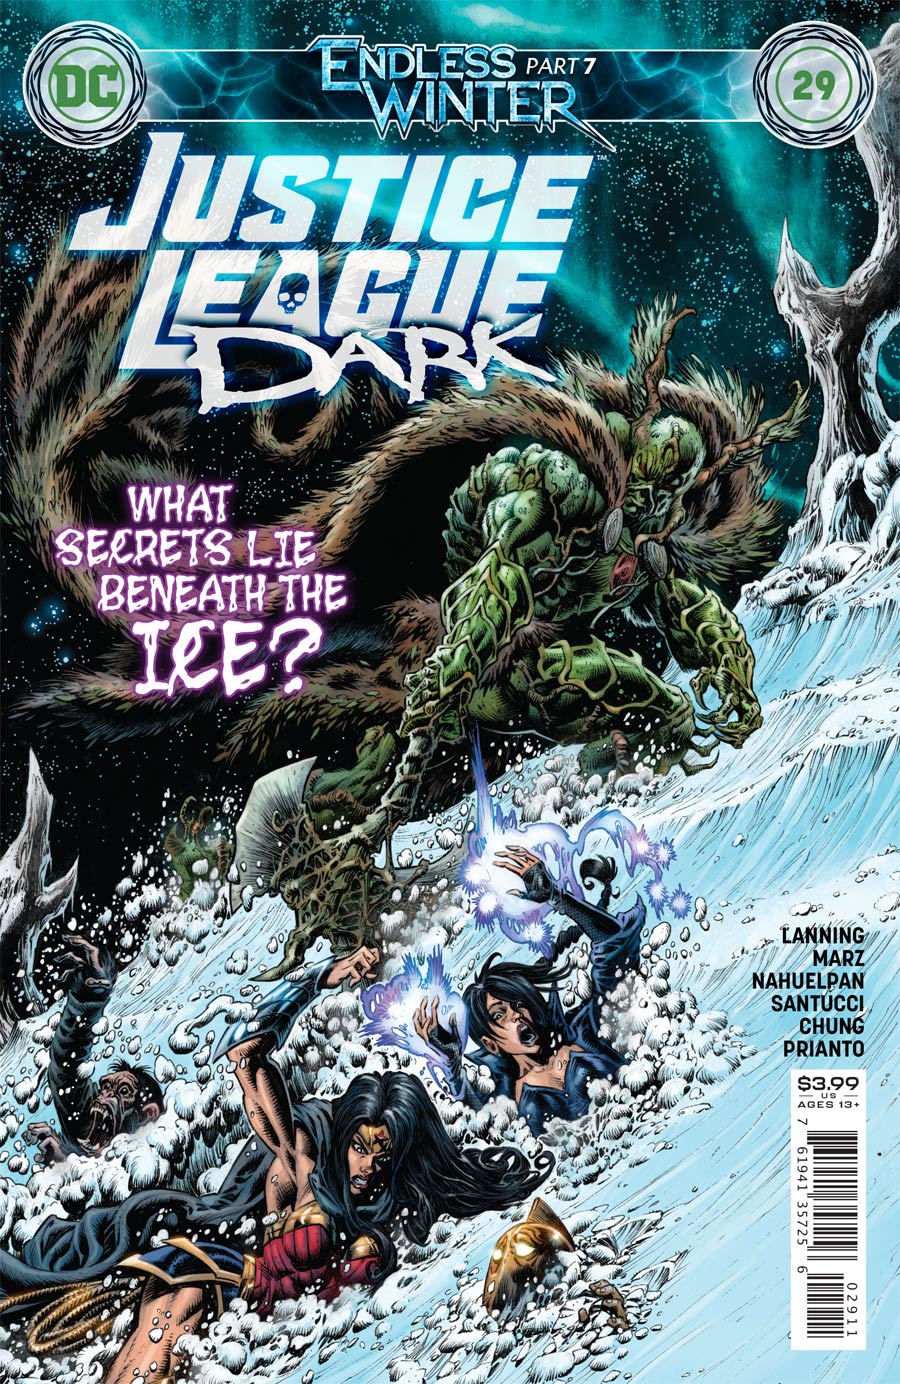 Justice League Dark #29 (2020)